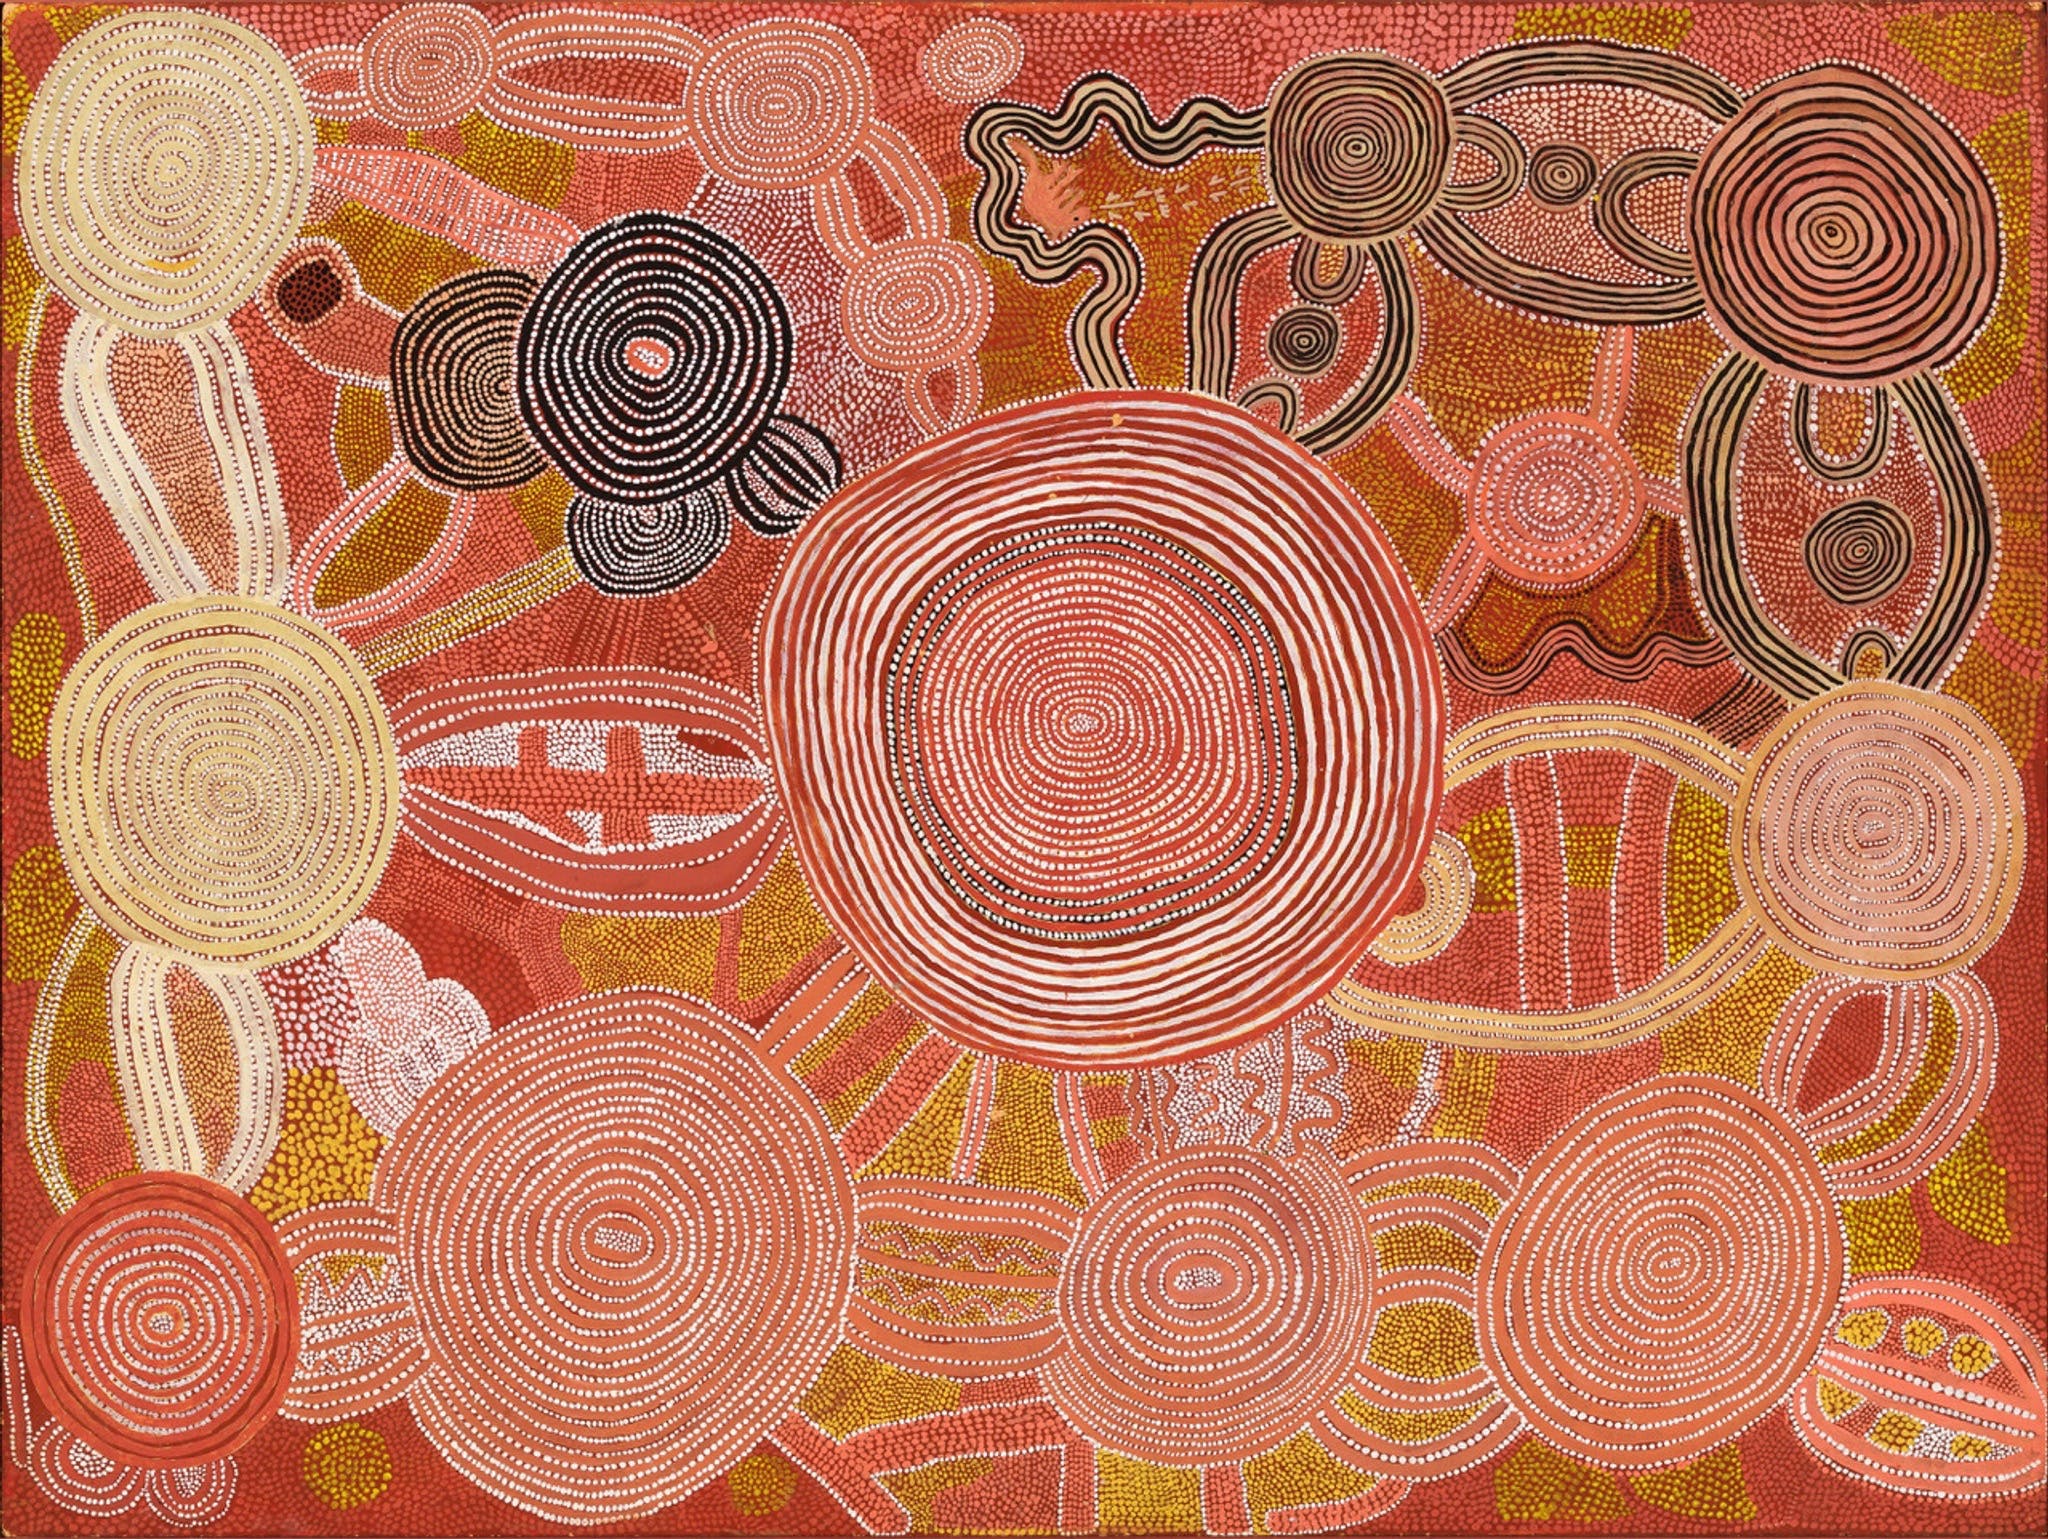 Reverence Exhibition of Australian Indigenous Art - Accommodation Mount Tamborine